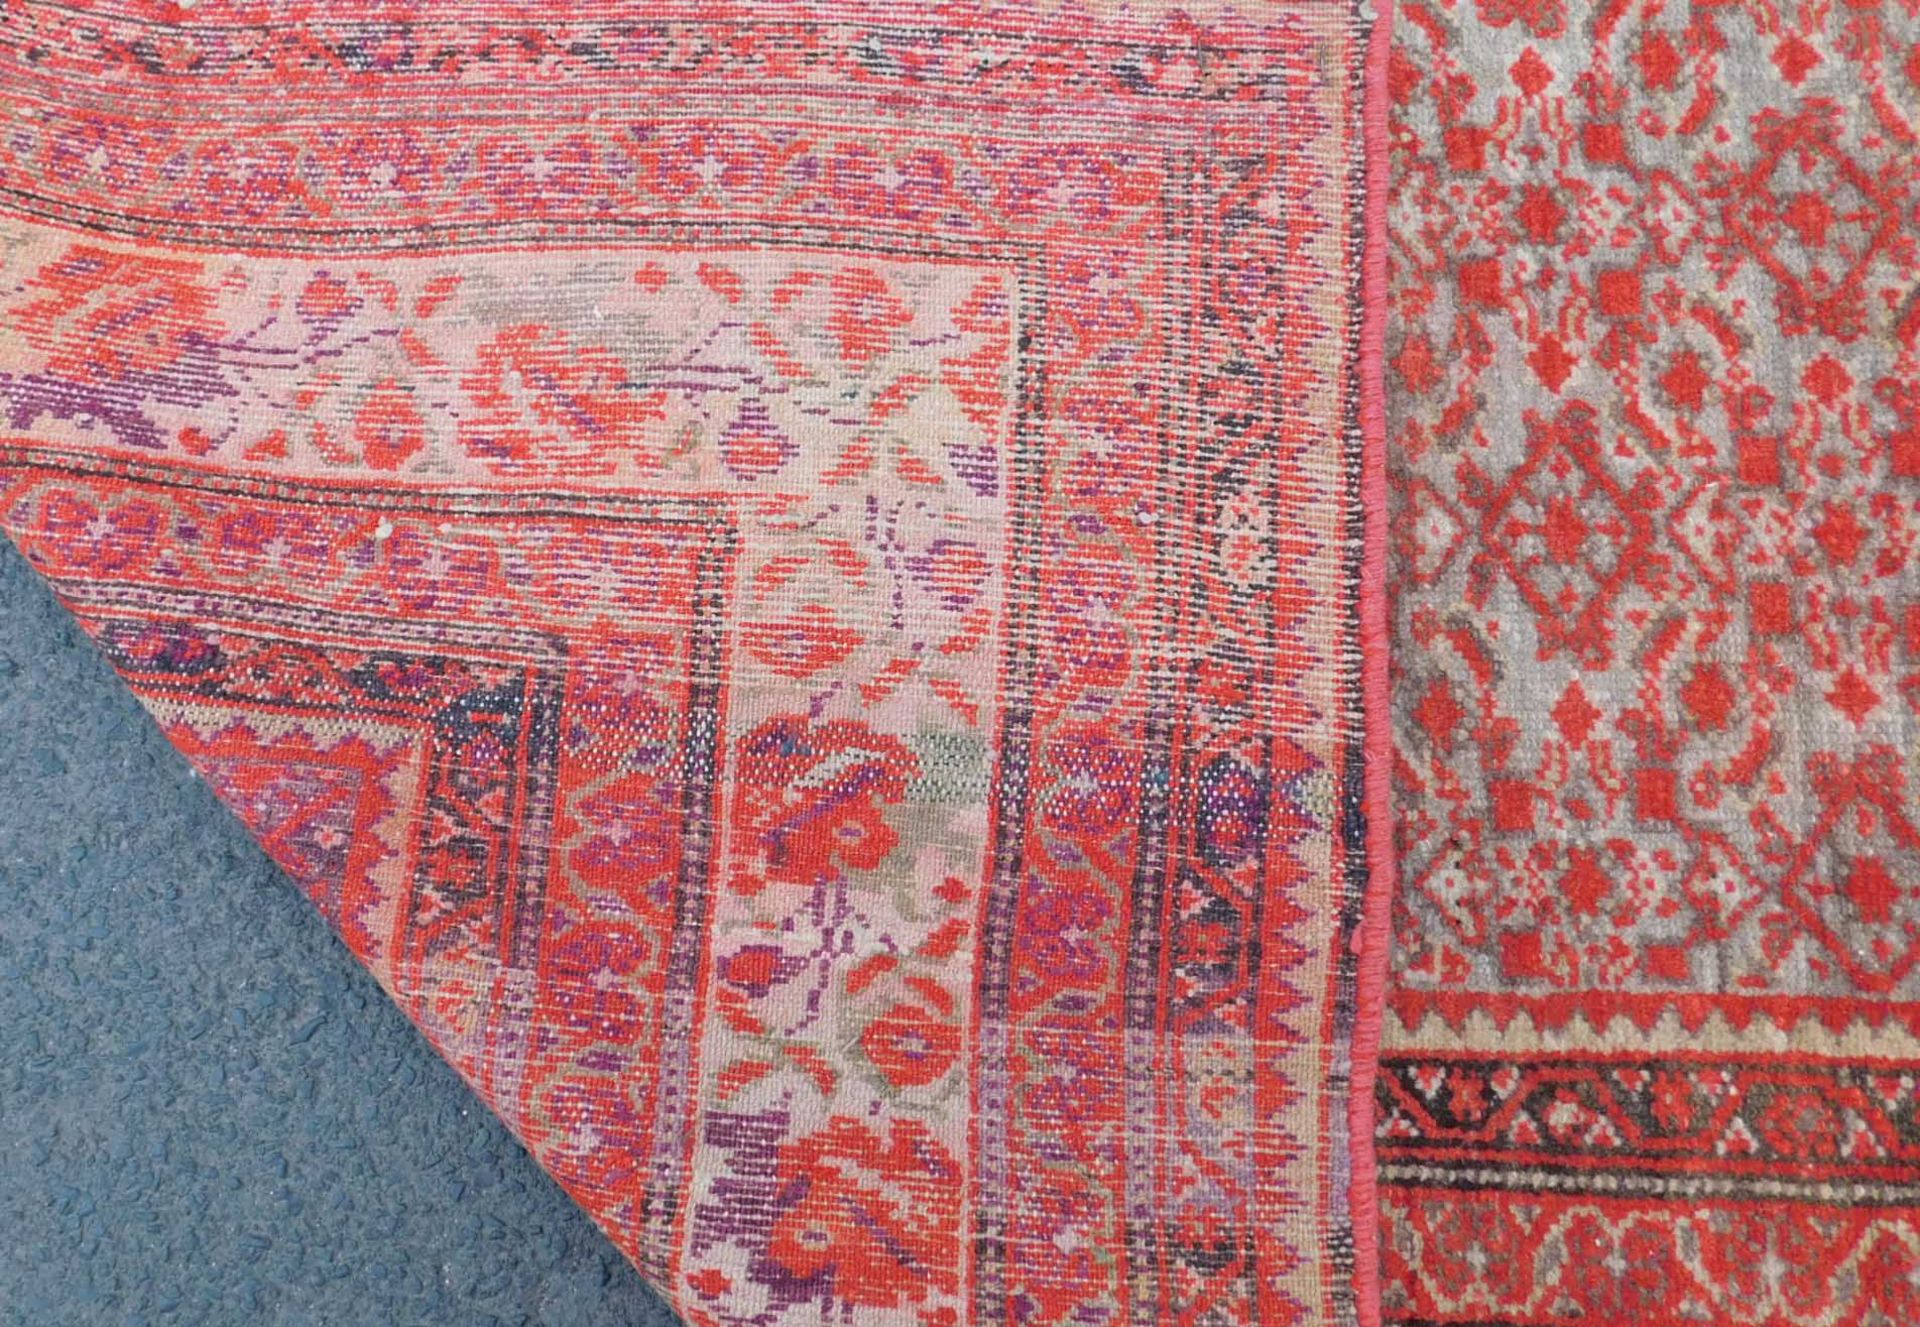 Malayer Persian carpet. Iran. Antique, around 100 - 150 years old. - Image 5 of 6